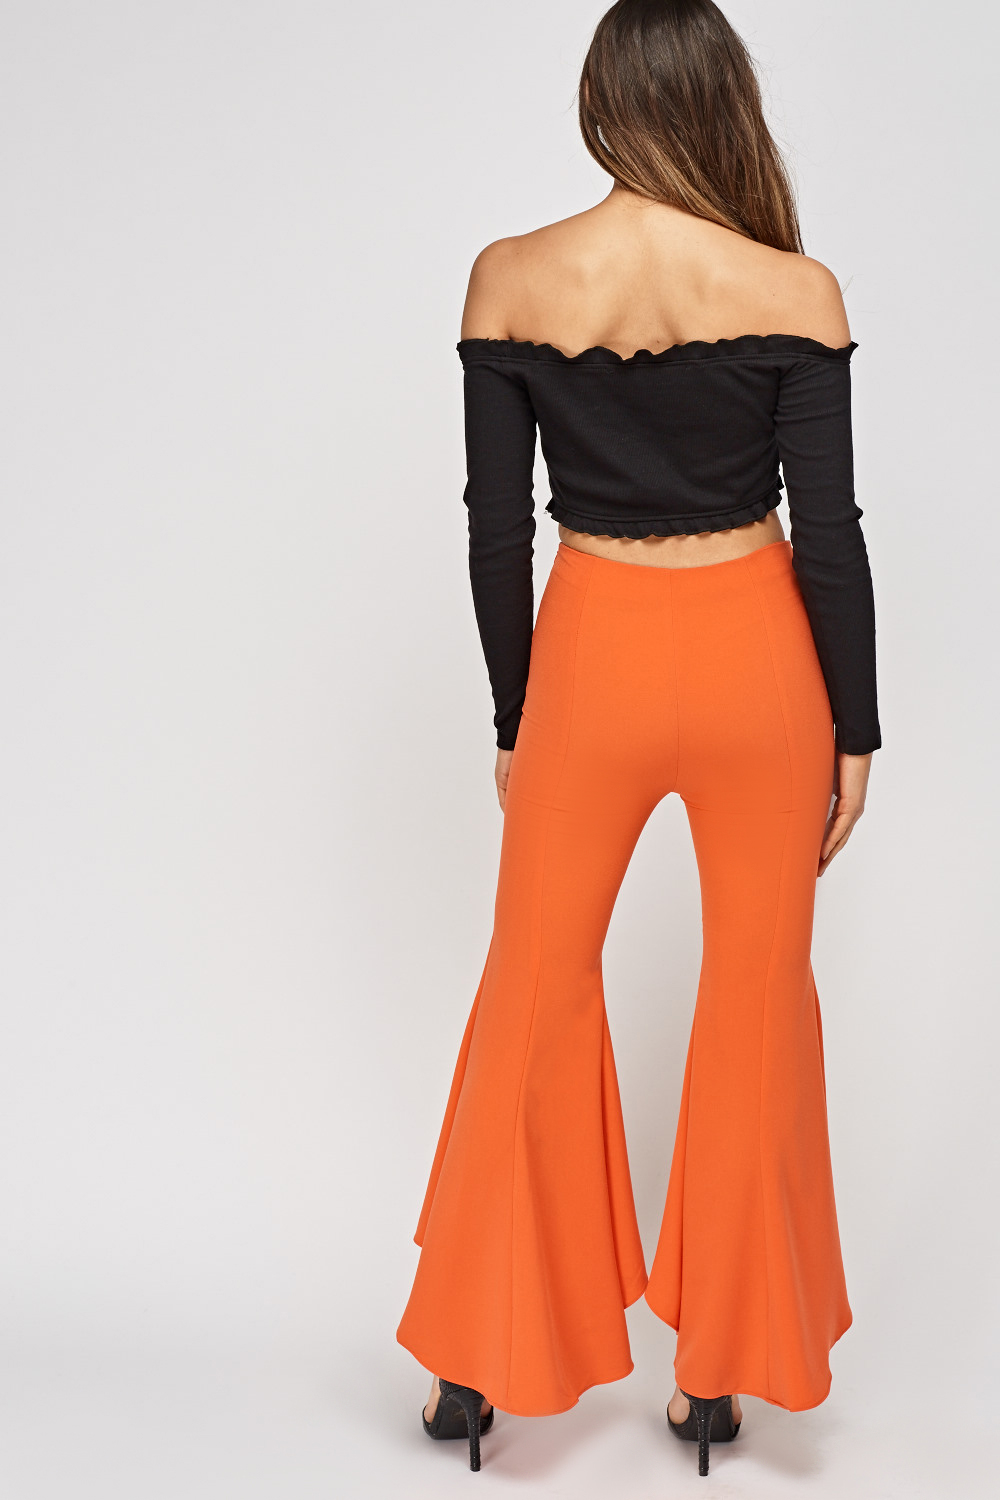 Orange Flare Hem Trousers - Just $7